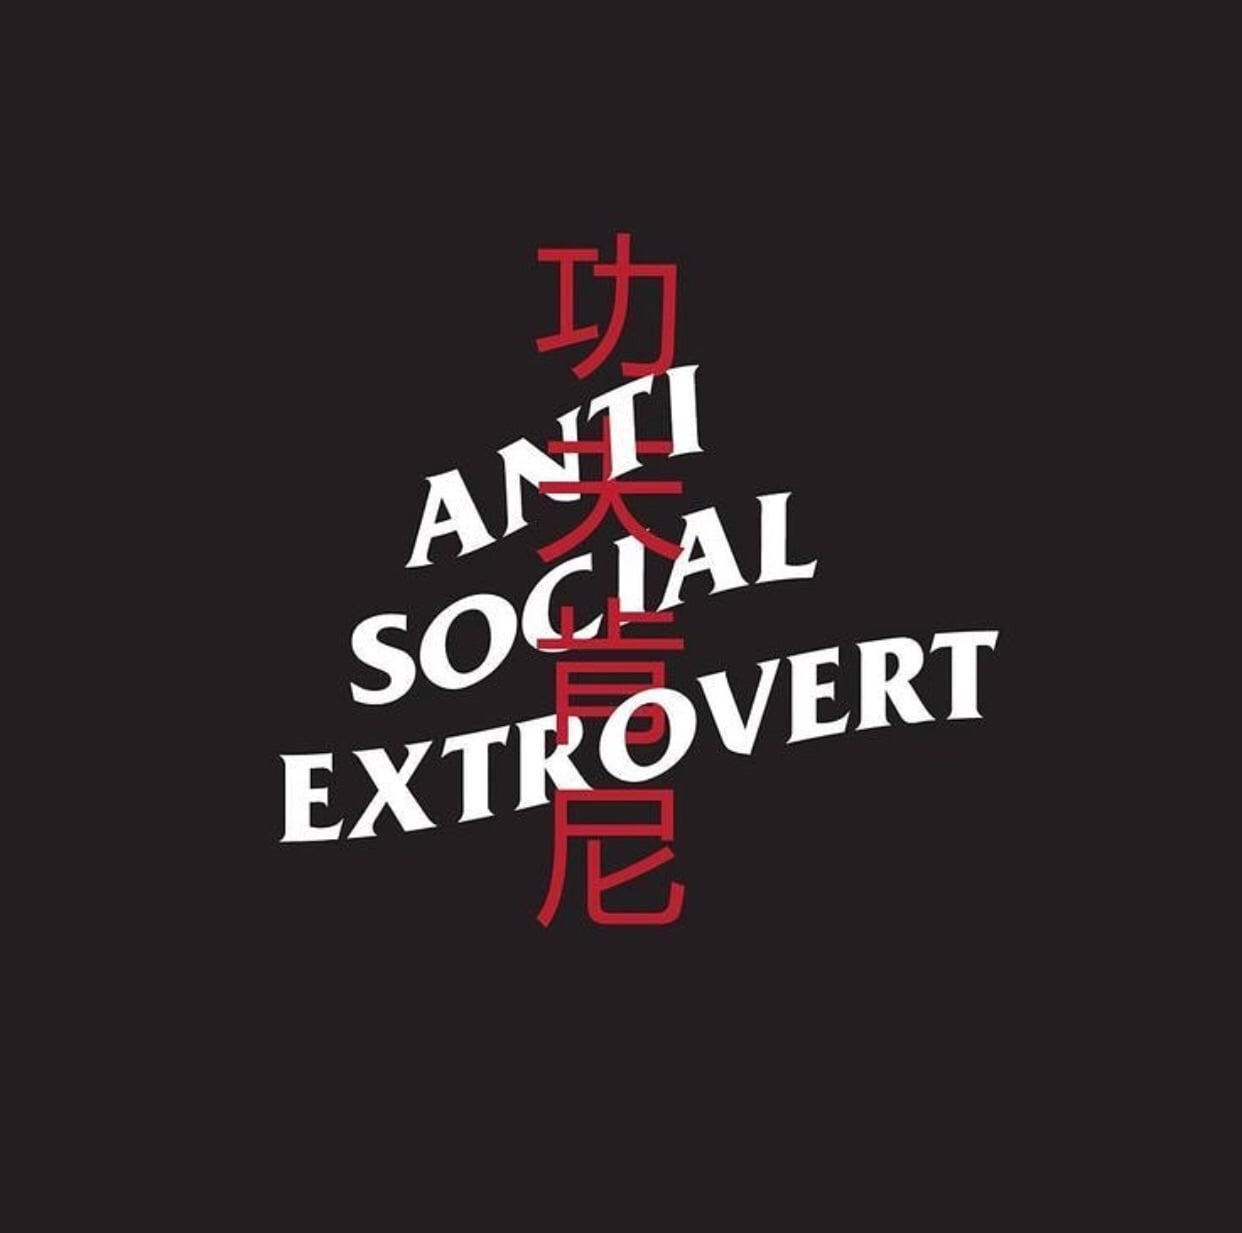 Anti social extrovert shared by Búnni